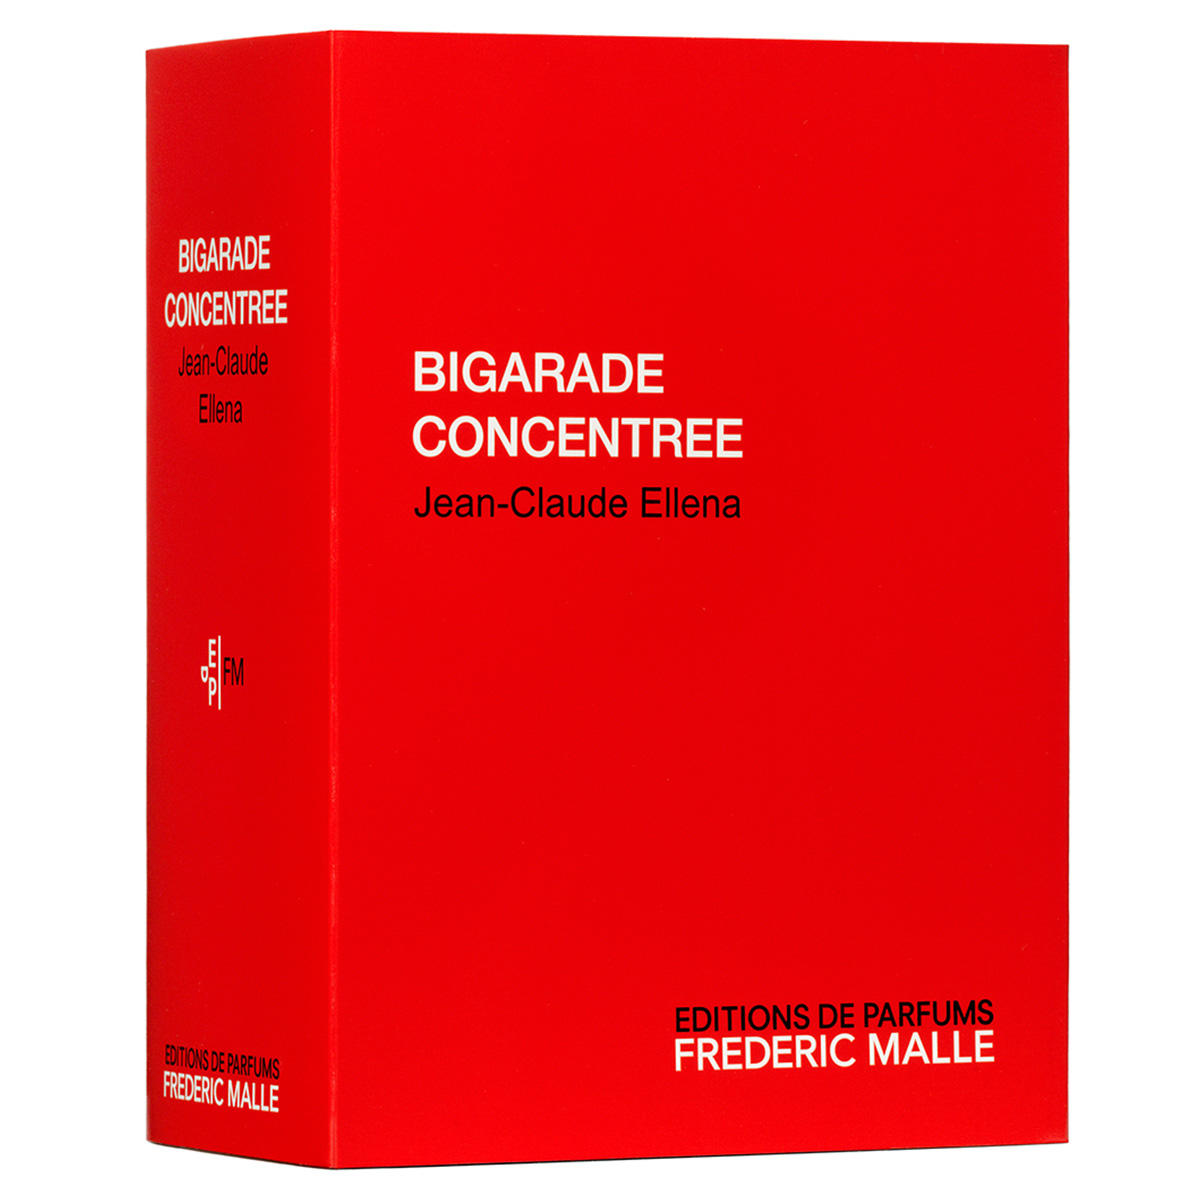 EDITIONS DE PARFUMS FREDERIC MALLE BIGARADE CONCENTREE EAU DE COLOGNE 100 ml - 2